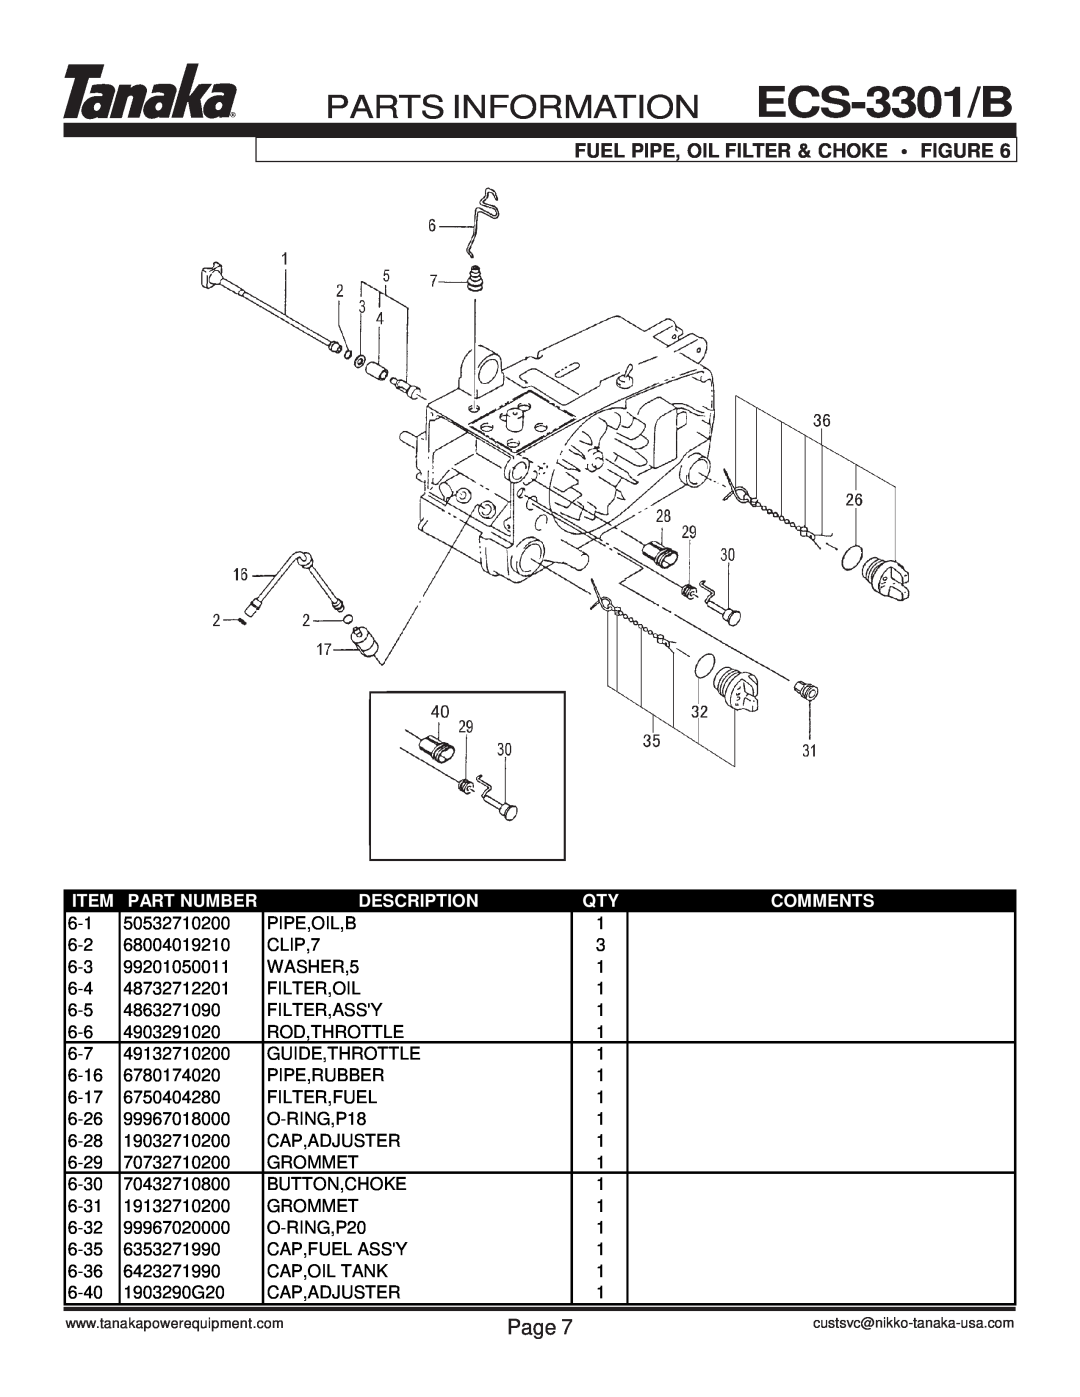 Tanaka Fuel Pipe, Oil Filter & Choke • Figure, PARTS INFORMATION ECS-3301/B, Page, Part Number, Description, Comments 